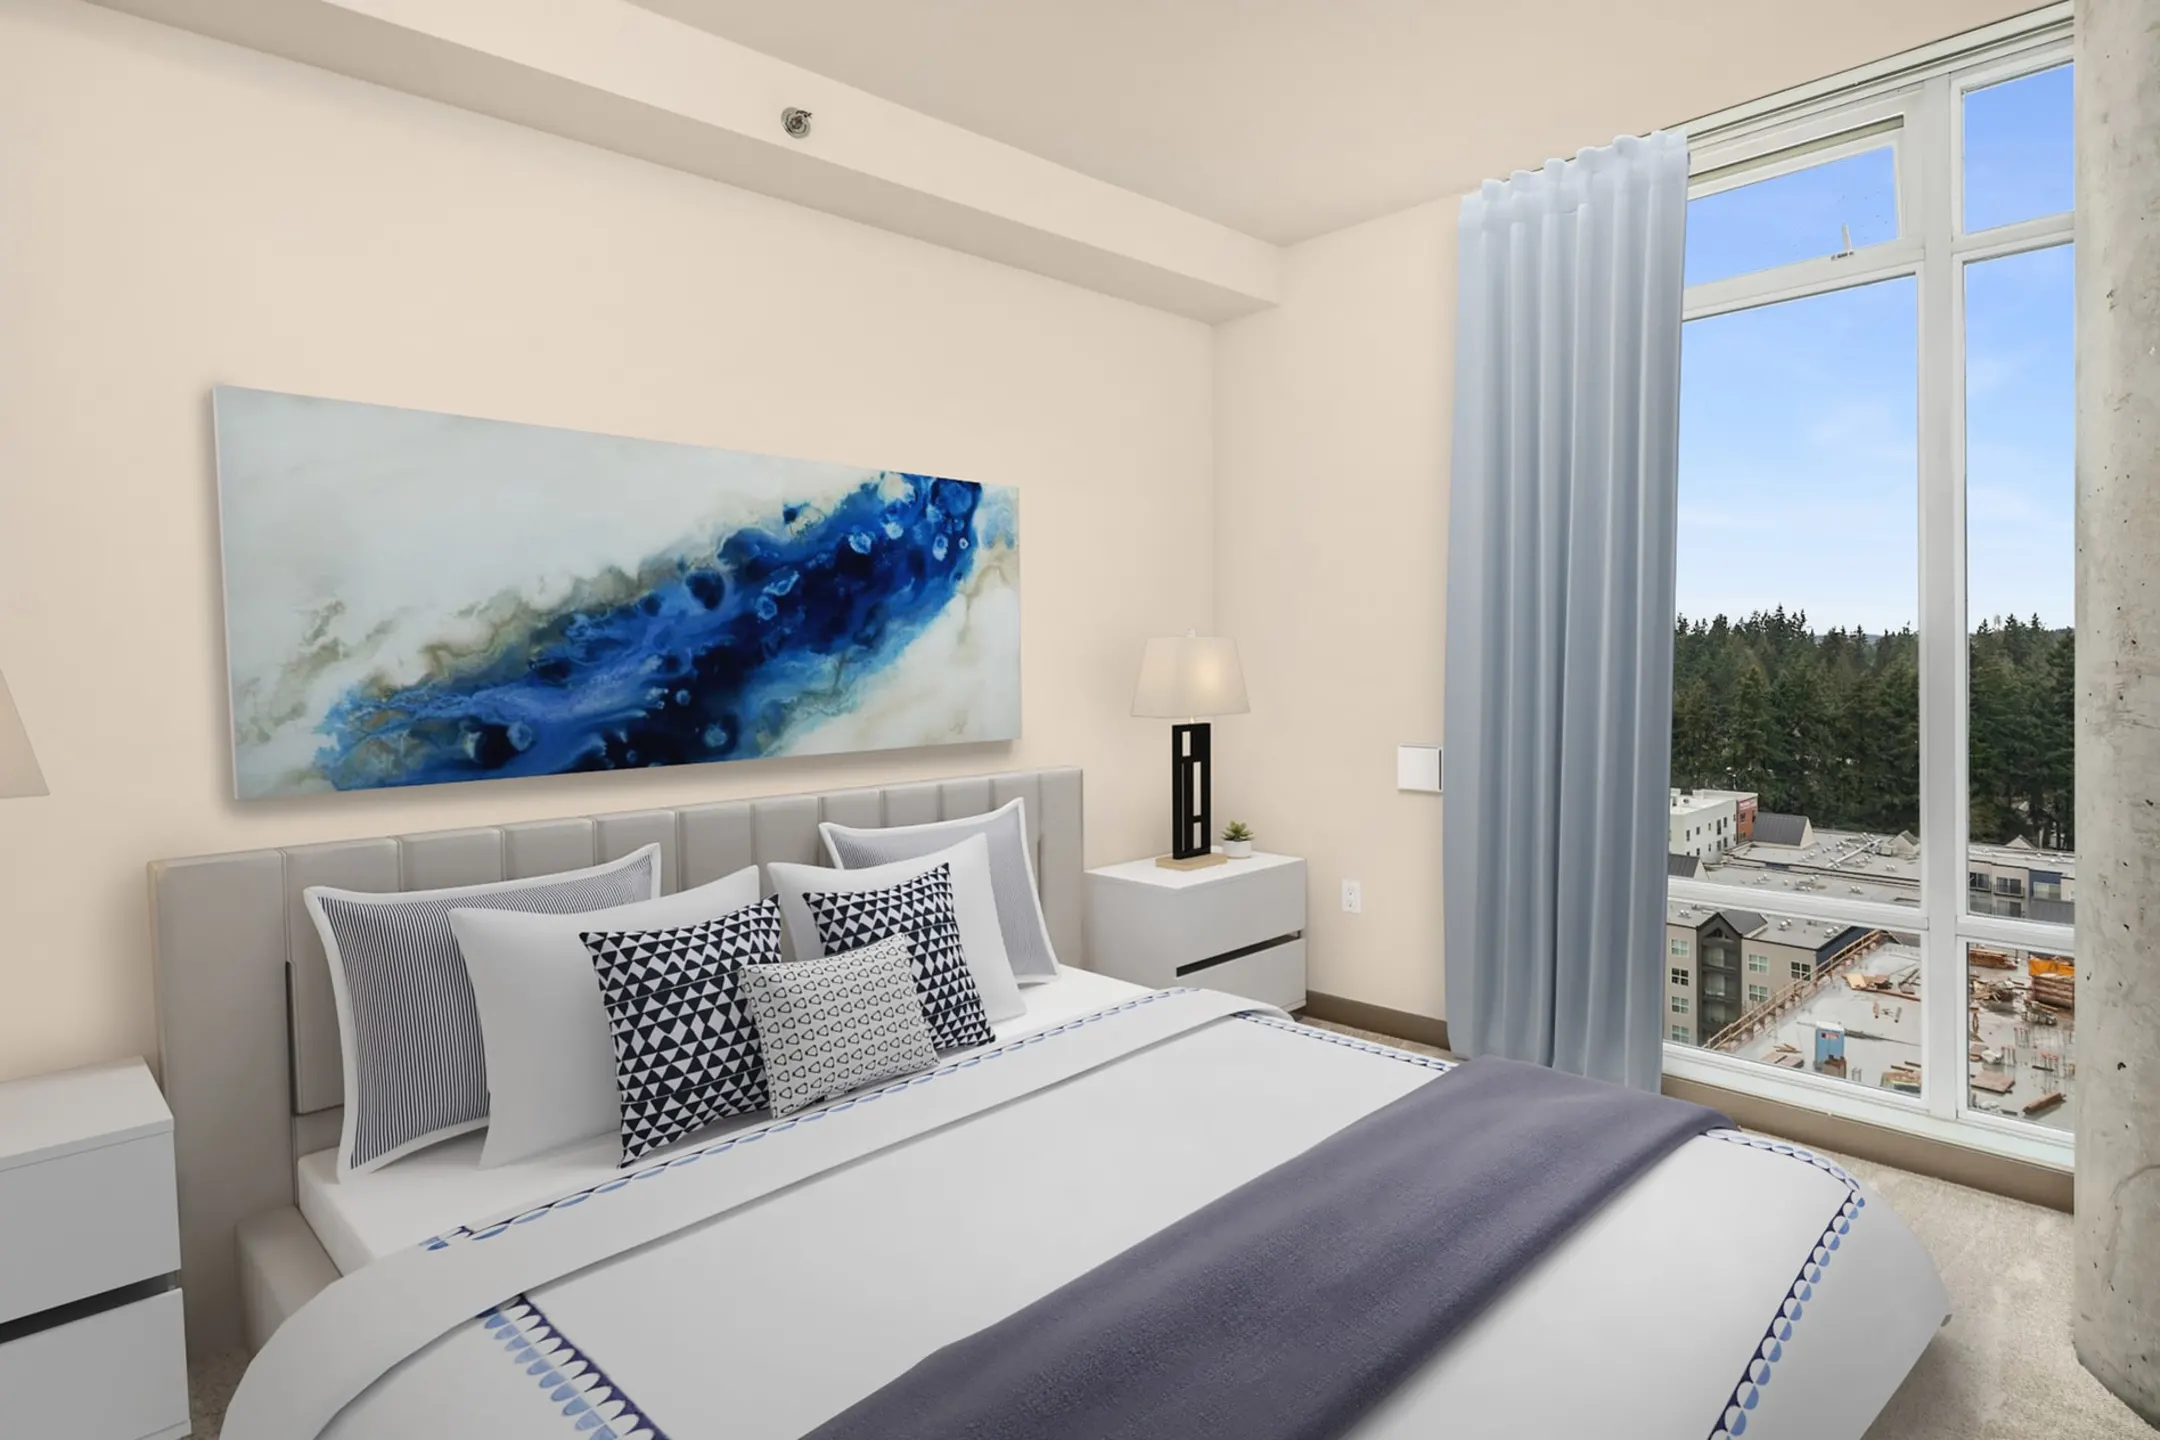 Bedroom - Elements Apartments - Bellevue, WA